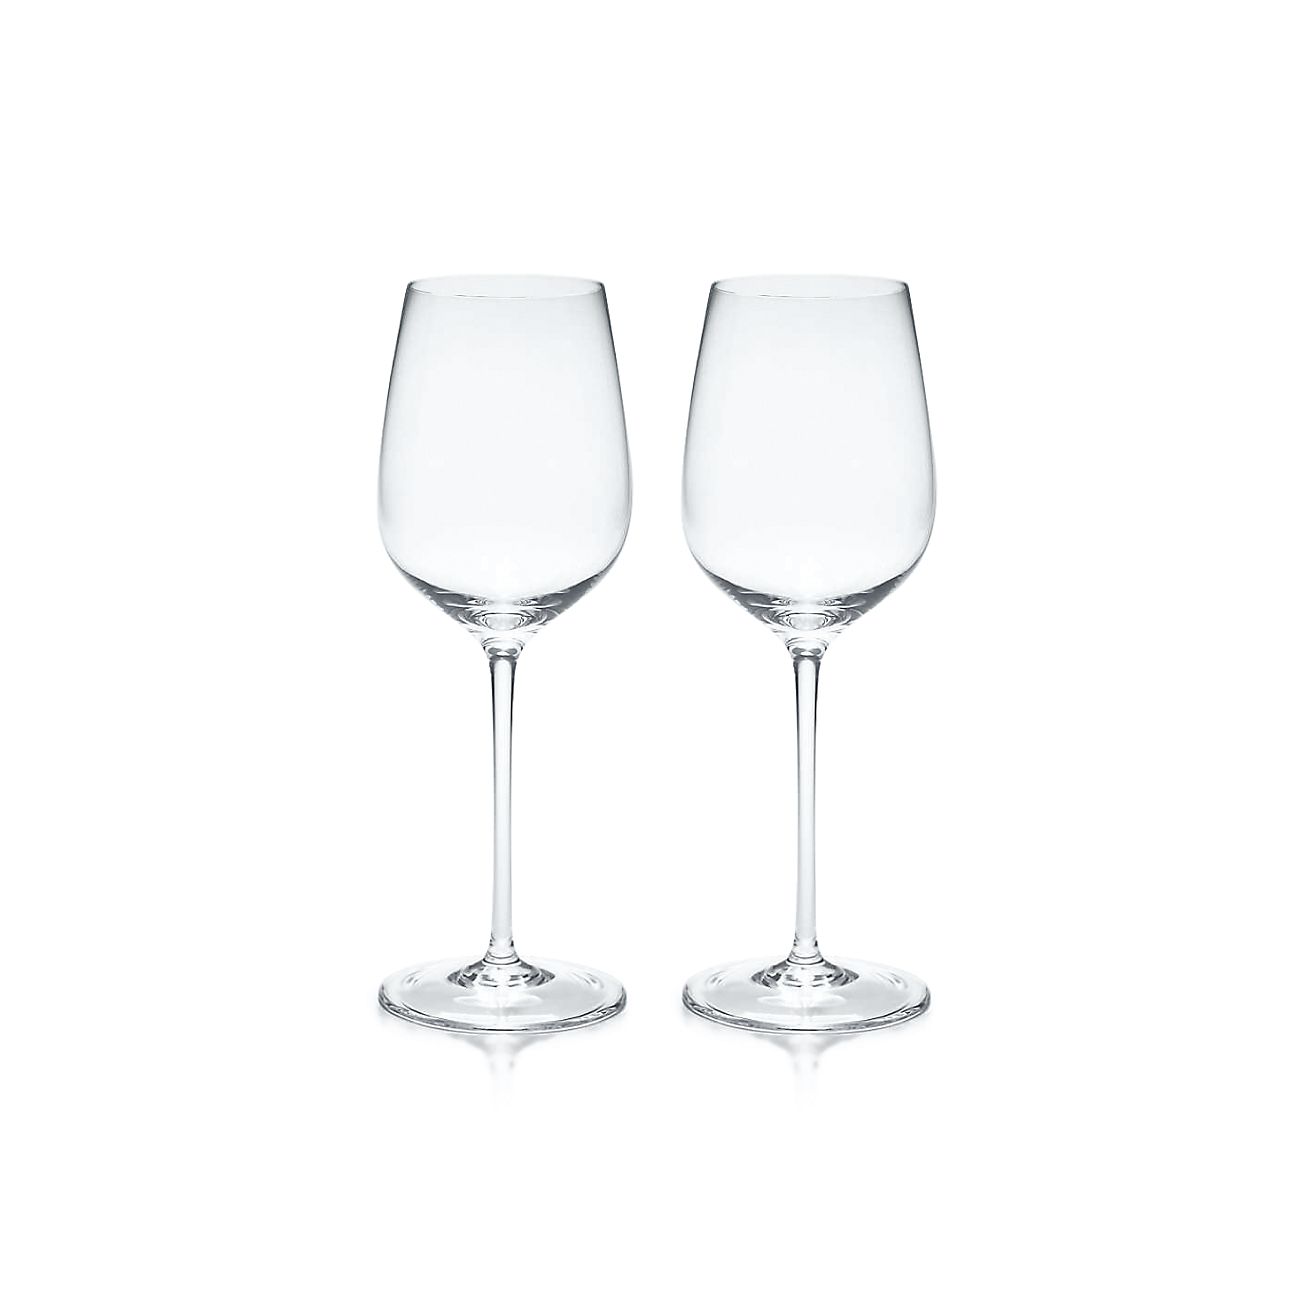 https://media.tiffany.com/is/image/Tiffany/EcomItemL2/tiffany-home-essentialsall-purpose-white-wine-glasses-69780180_1018198_ED.jpg